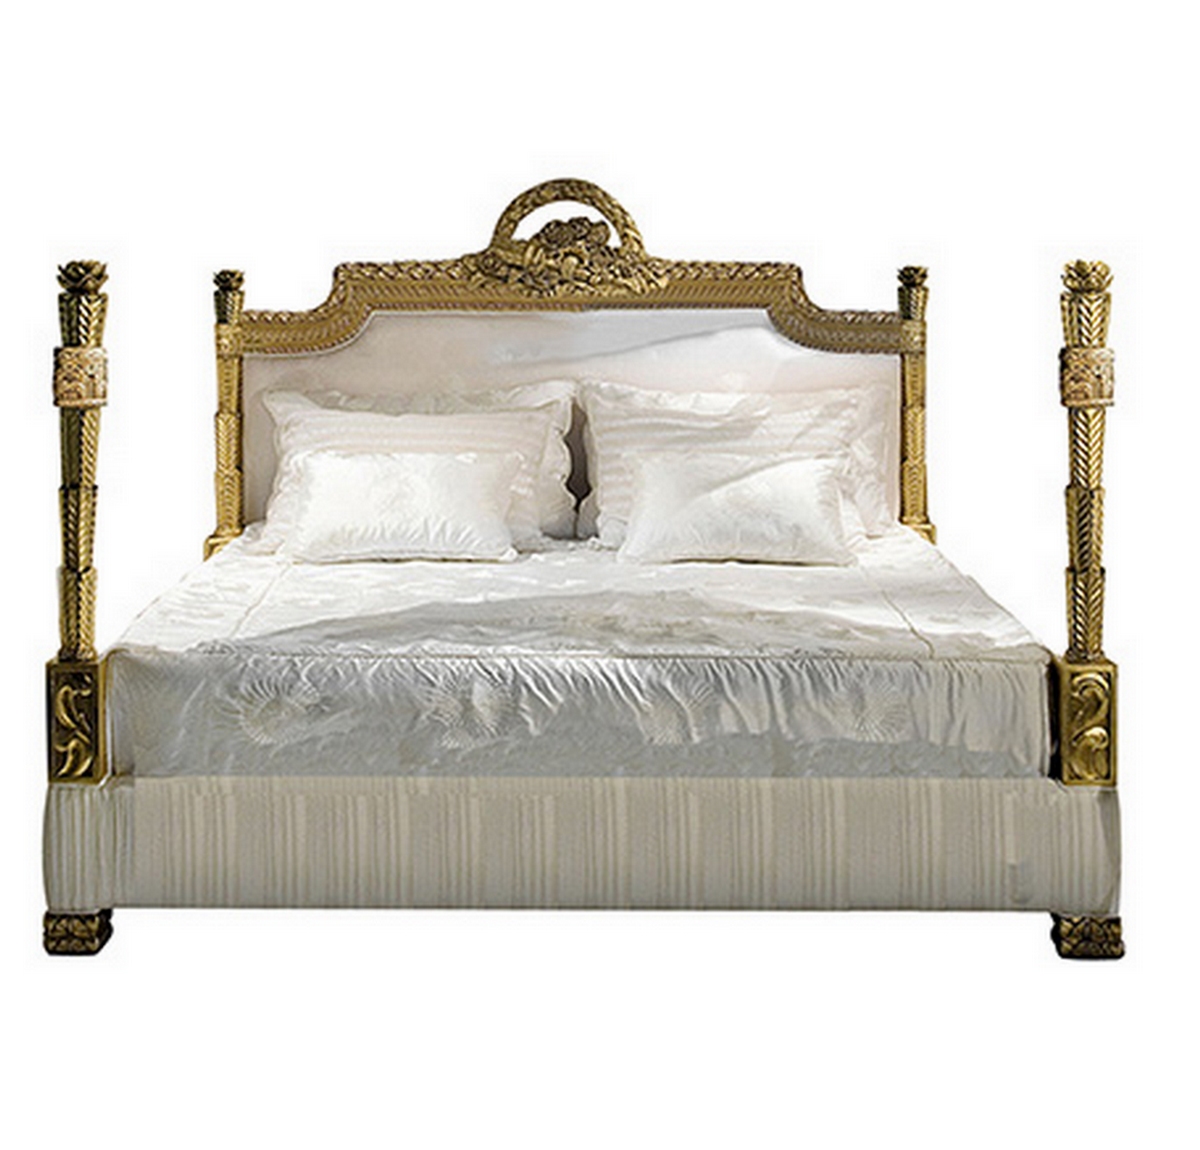 Luxury baroque bed 